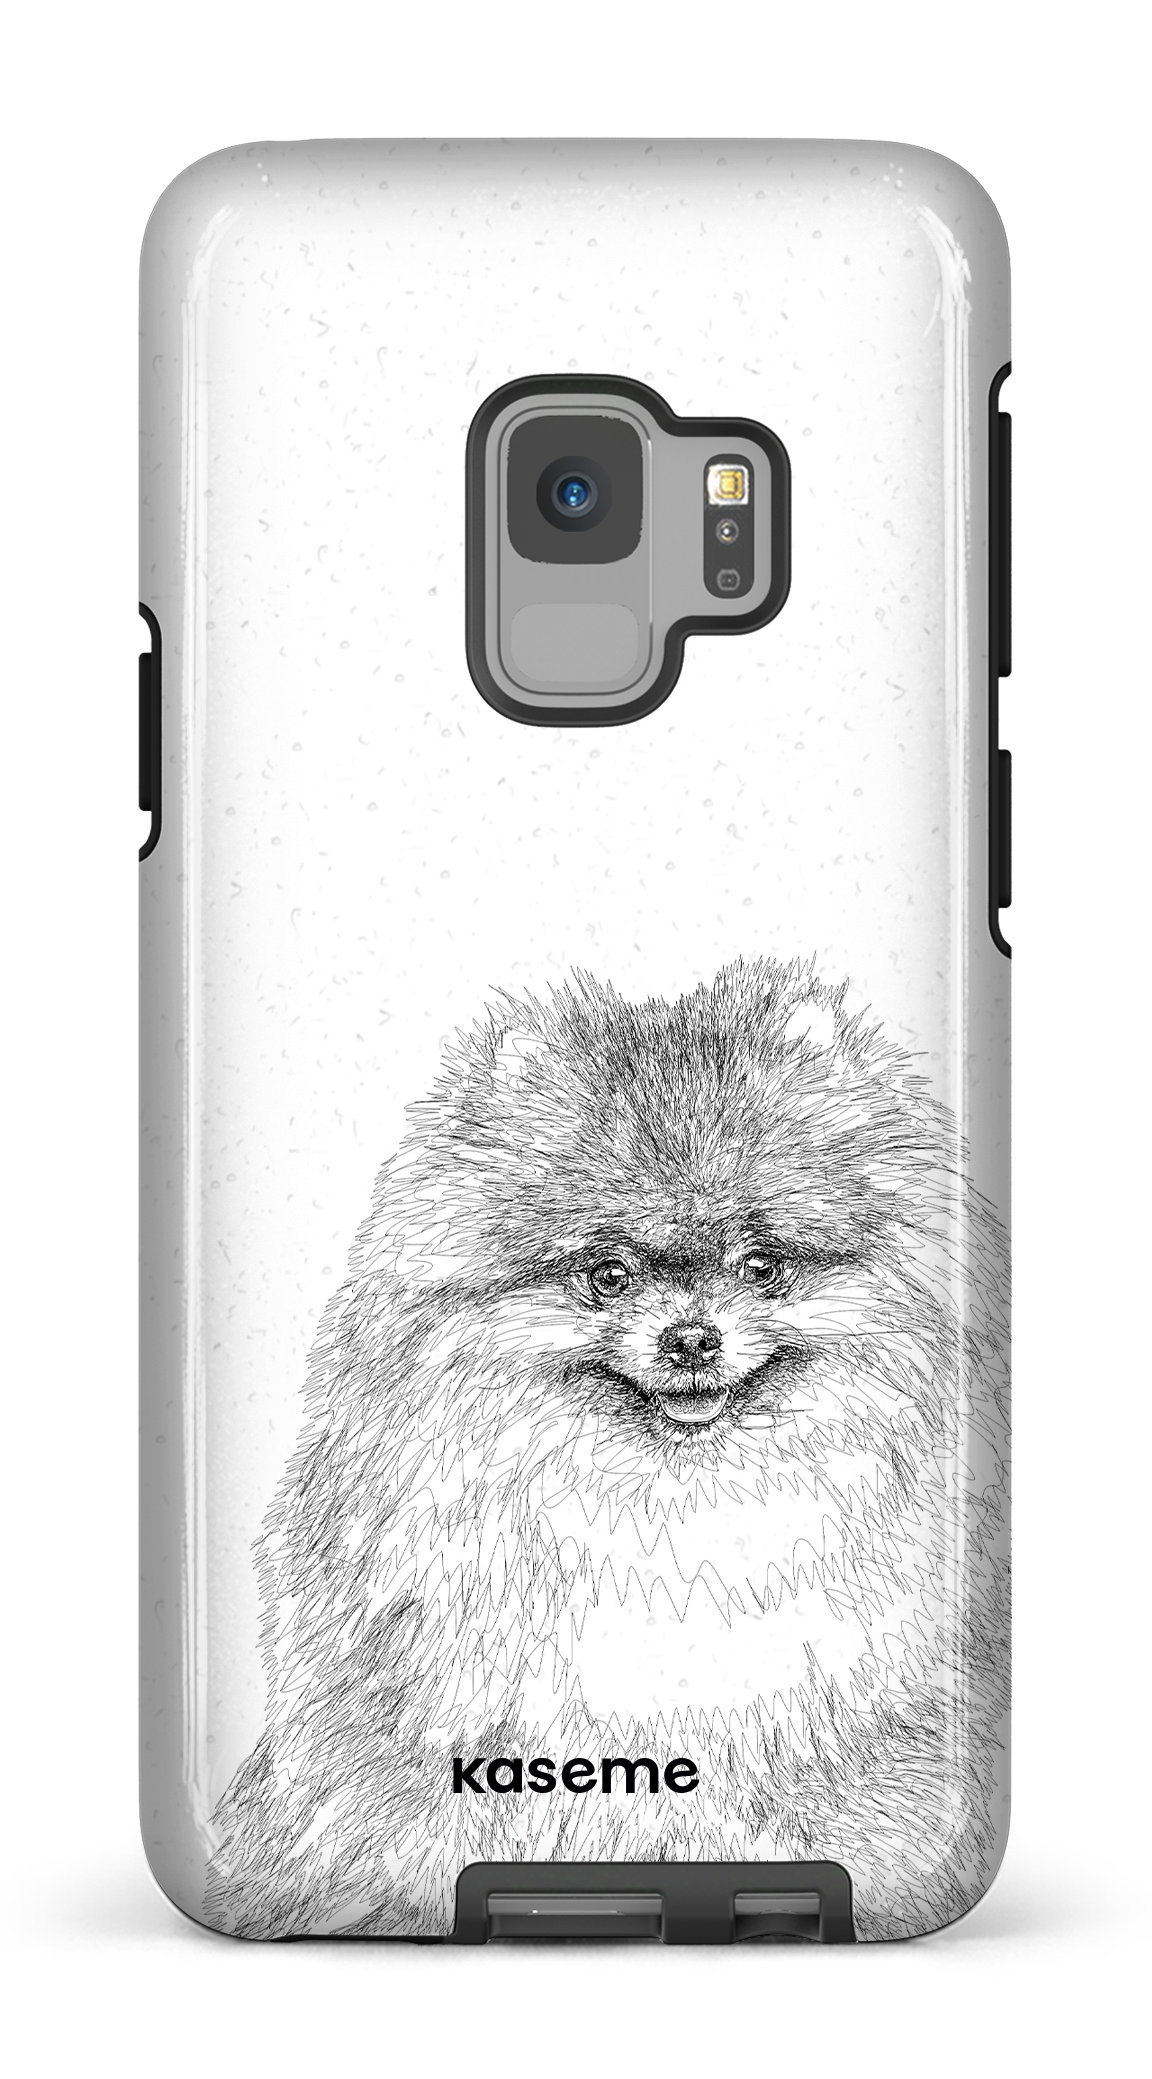 Pomerian - Galaxy S9